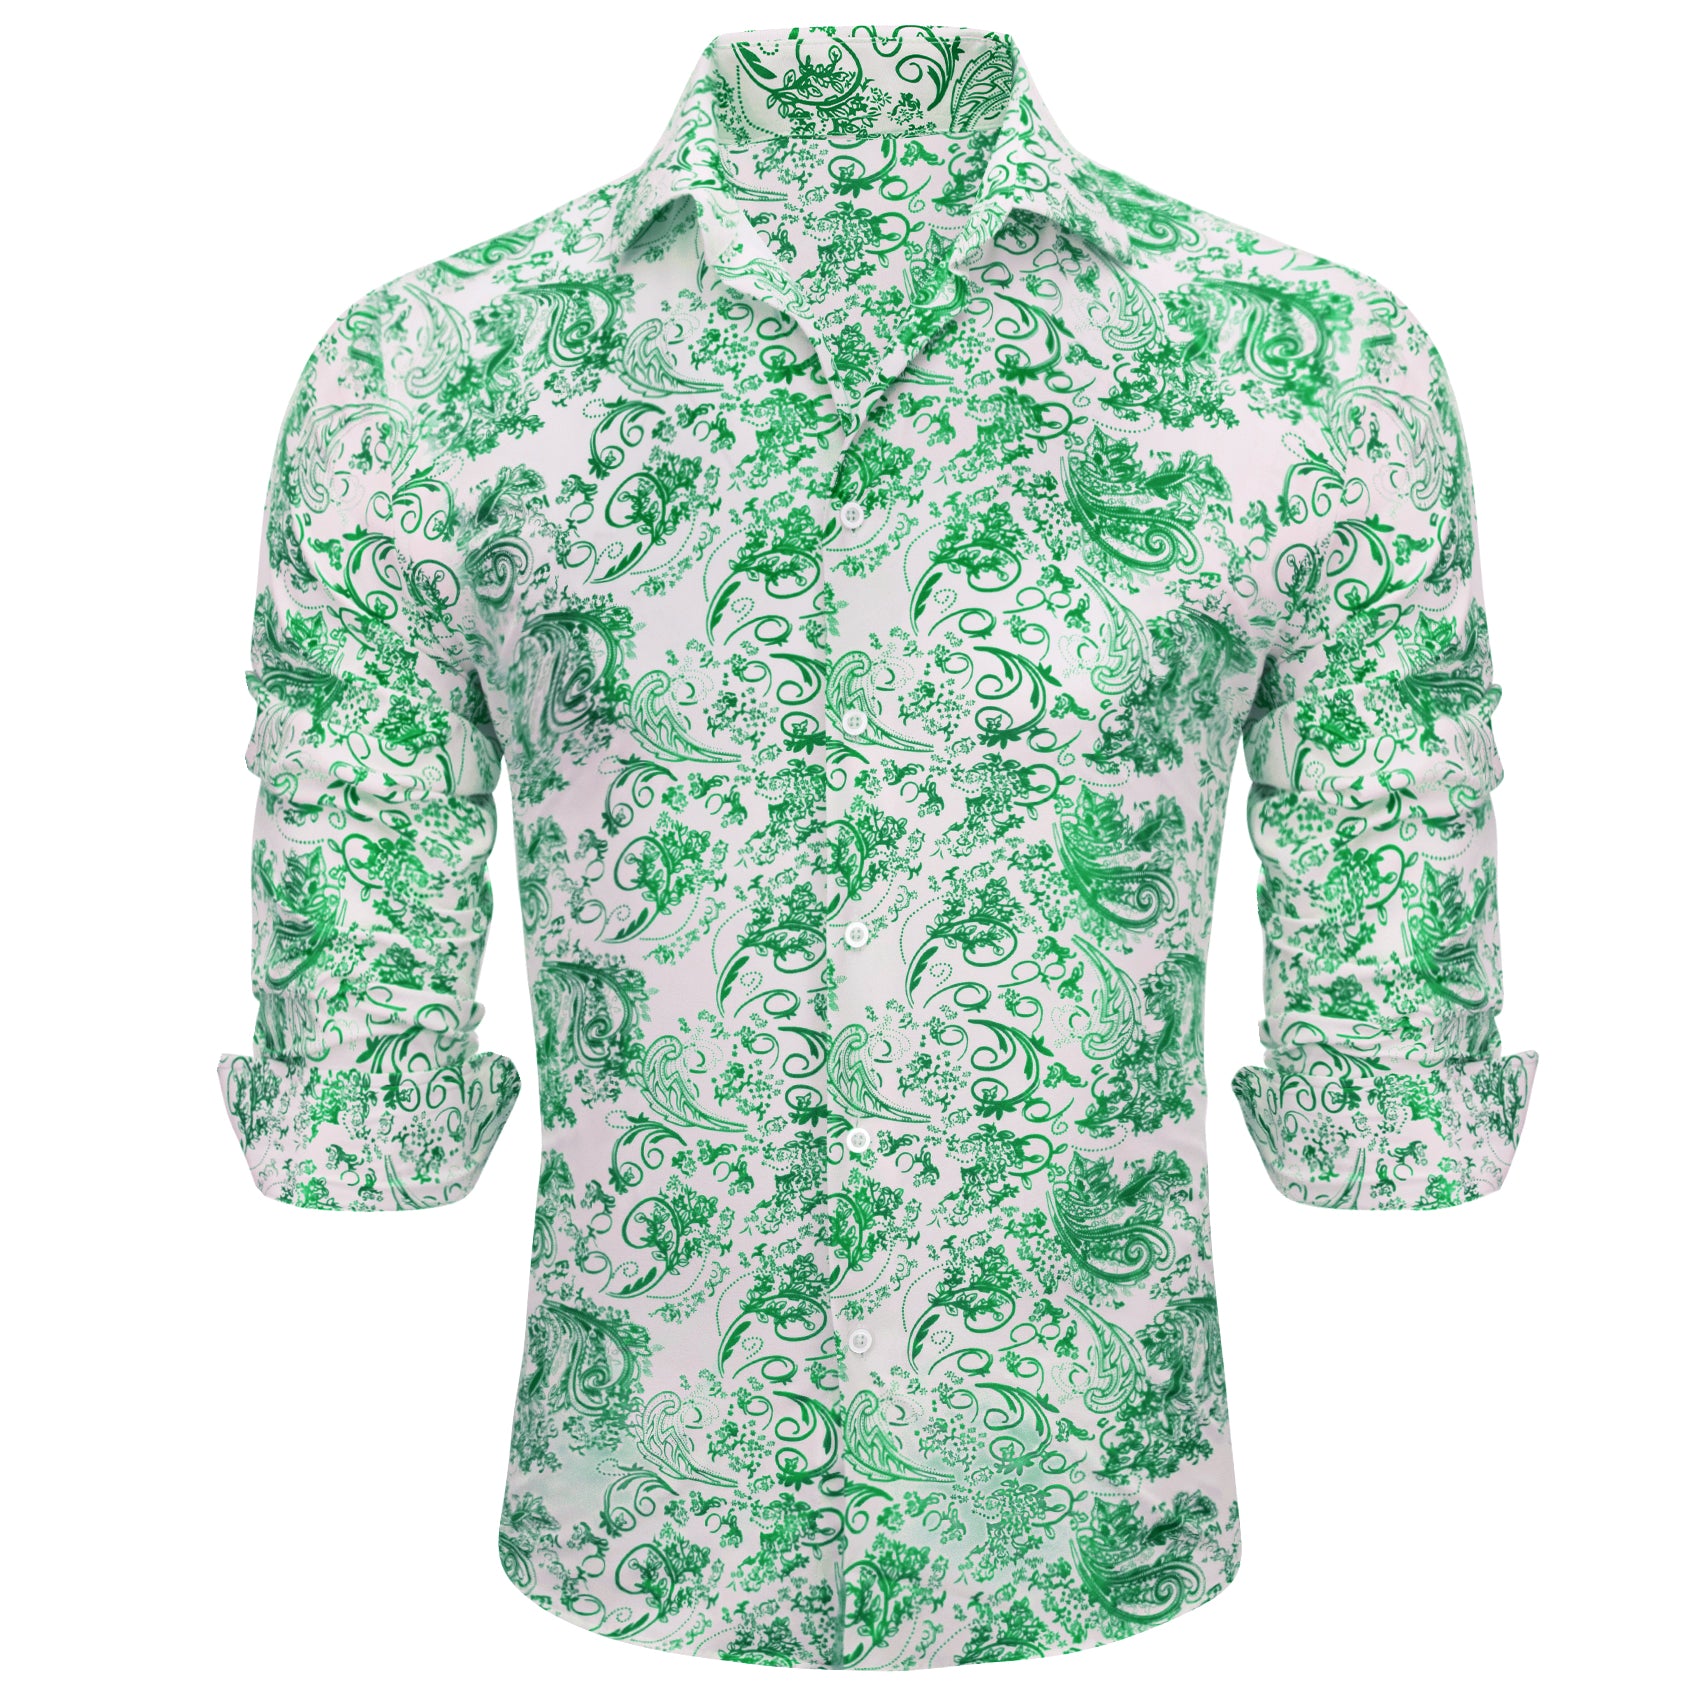 Barry.wang Refreshing White Green Floral Silk Men's Shirt